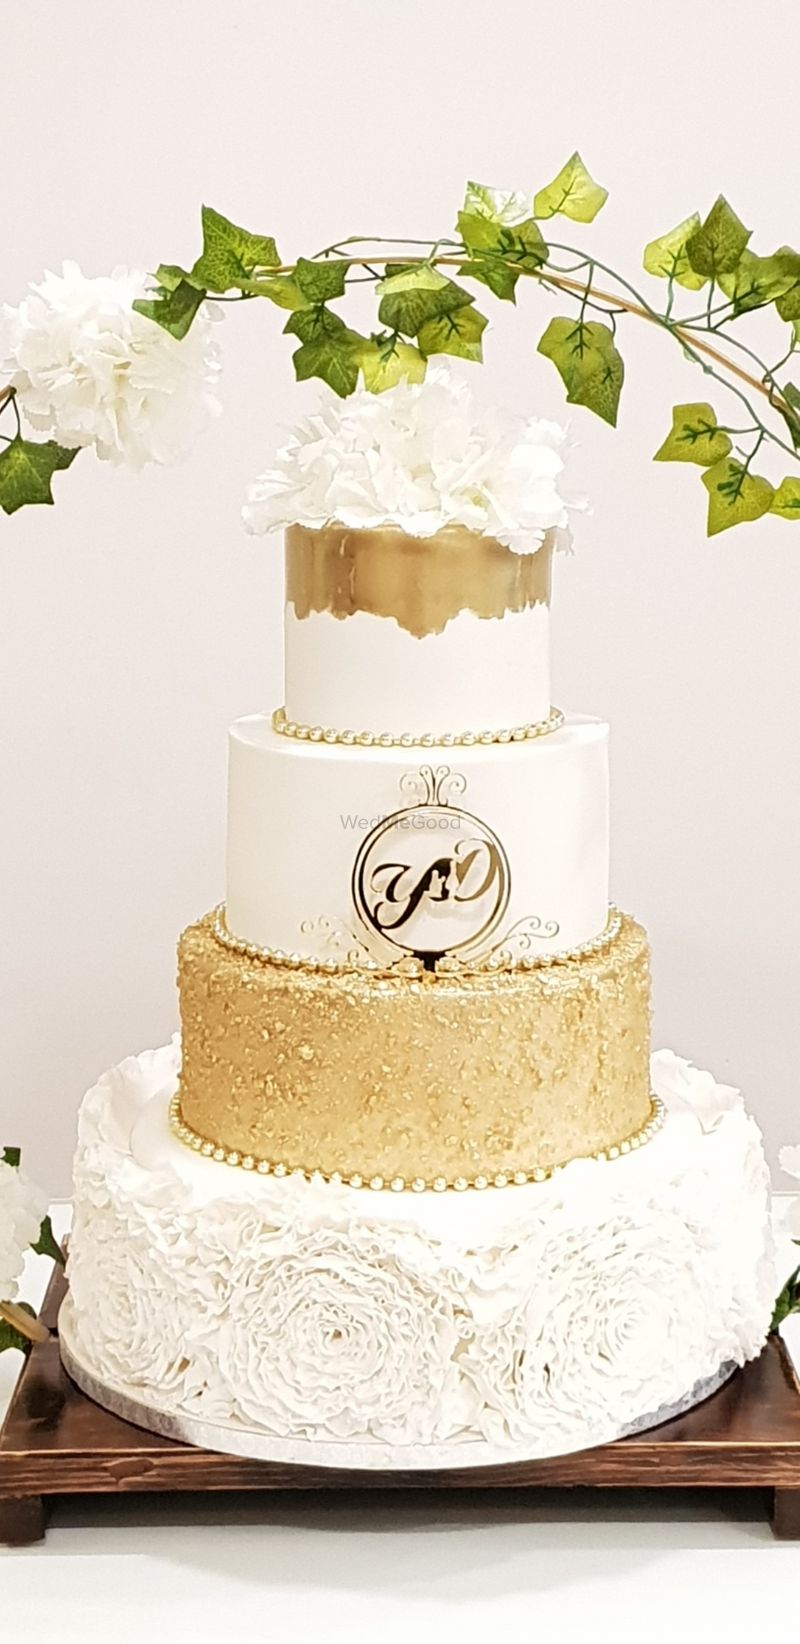 1080-Louis Vuitton Gifts & Cupcakes - Wedding Cakes